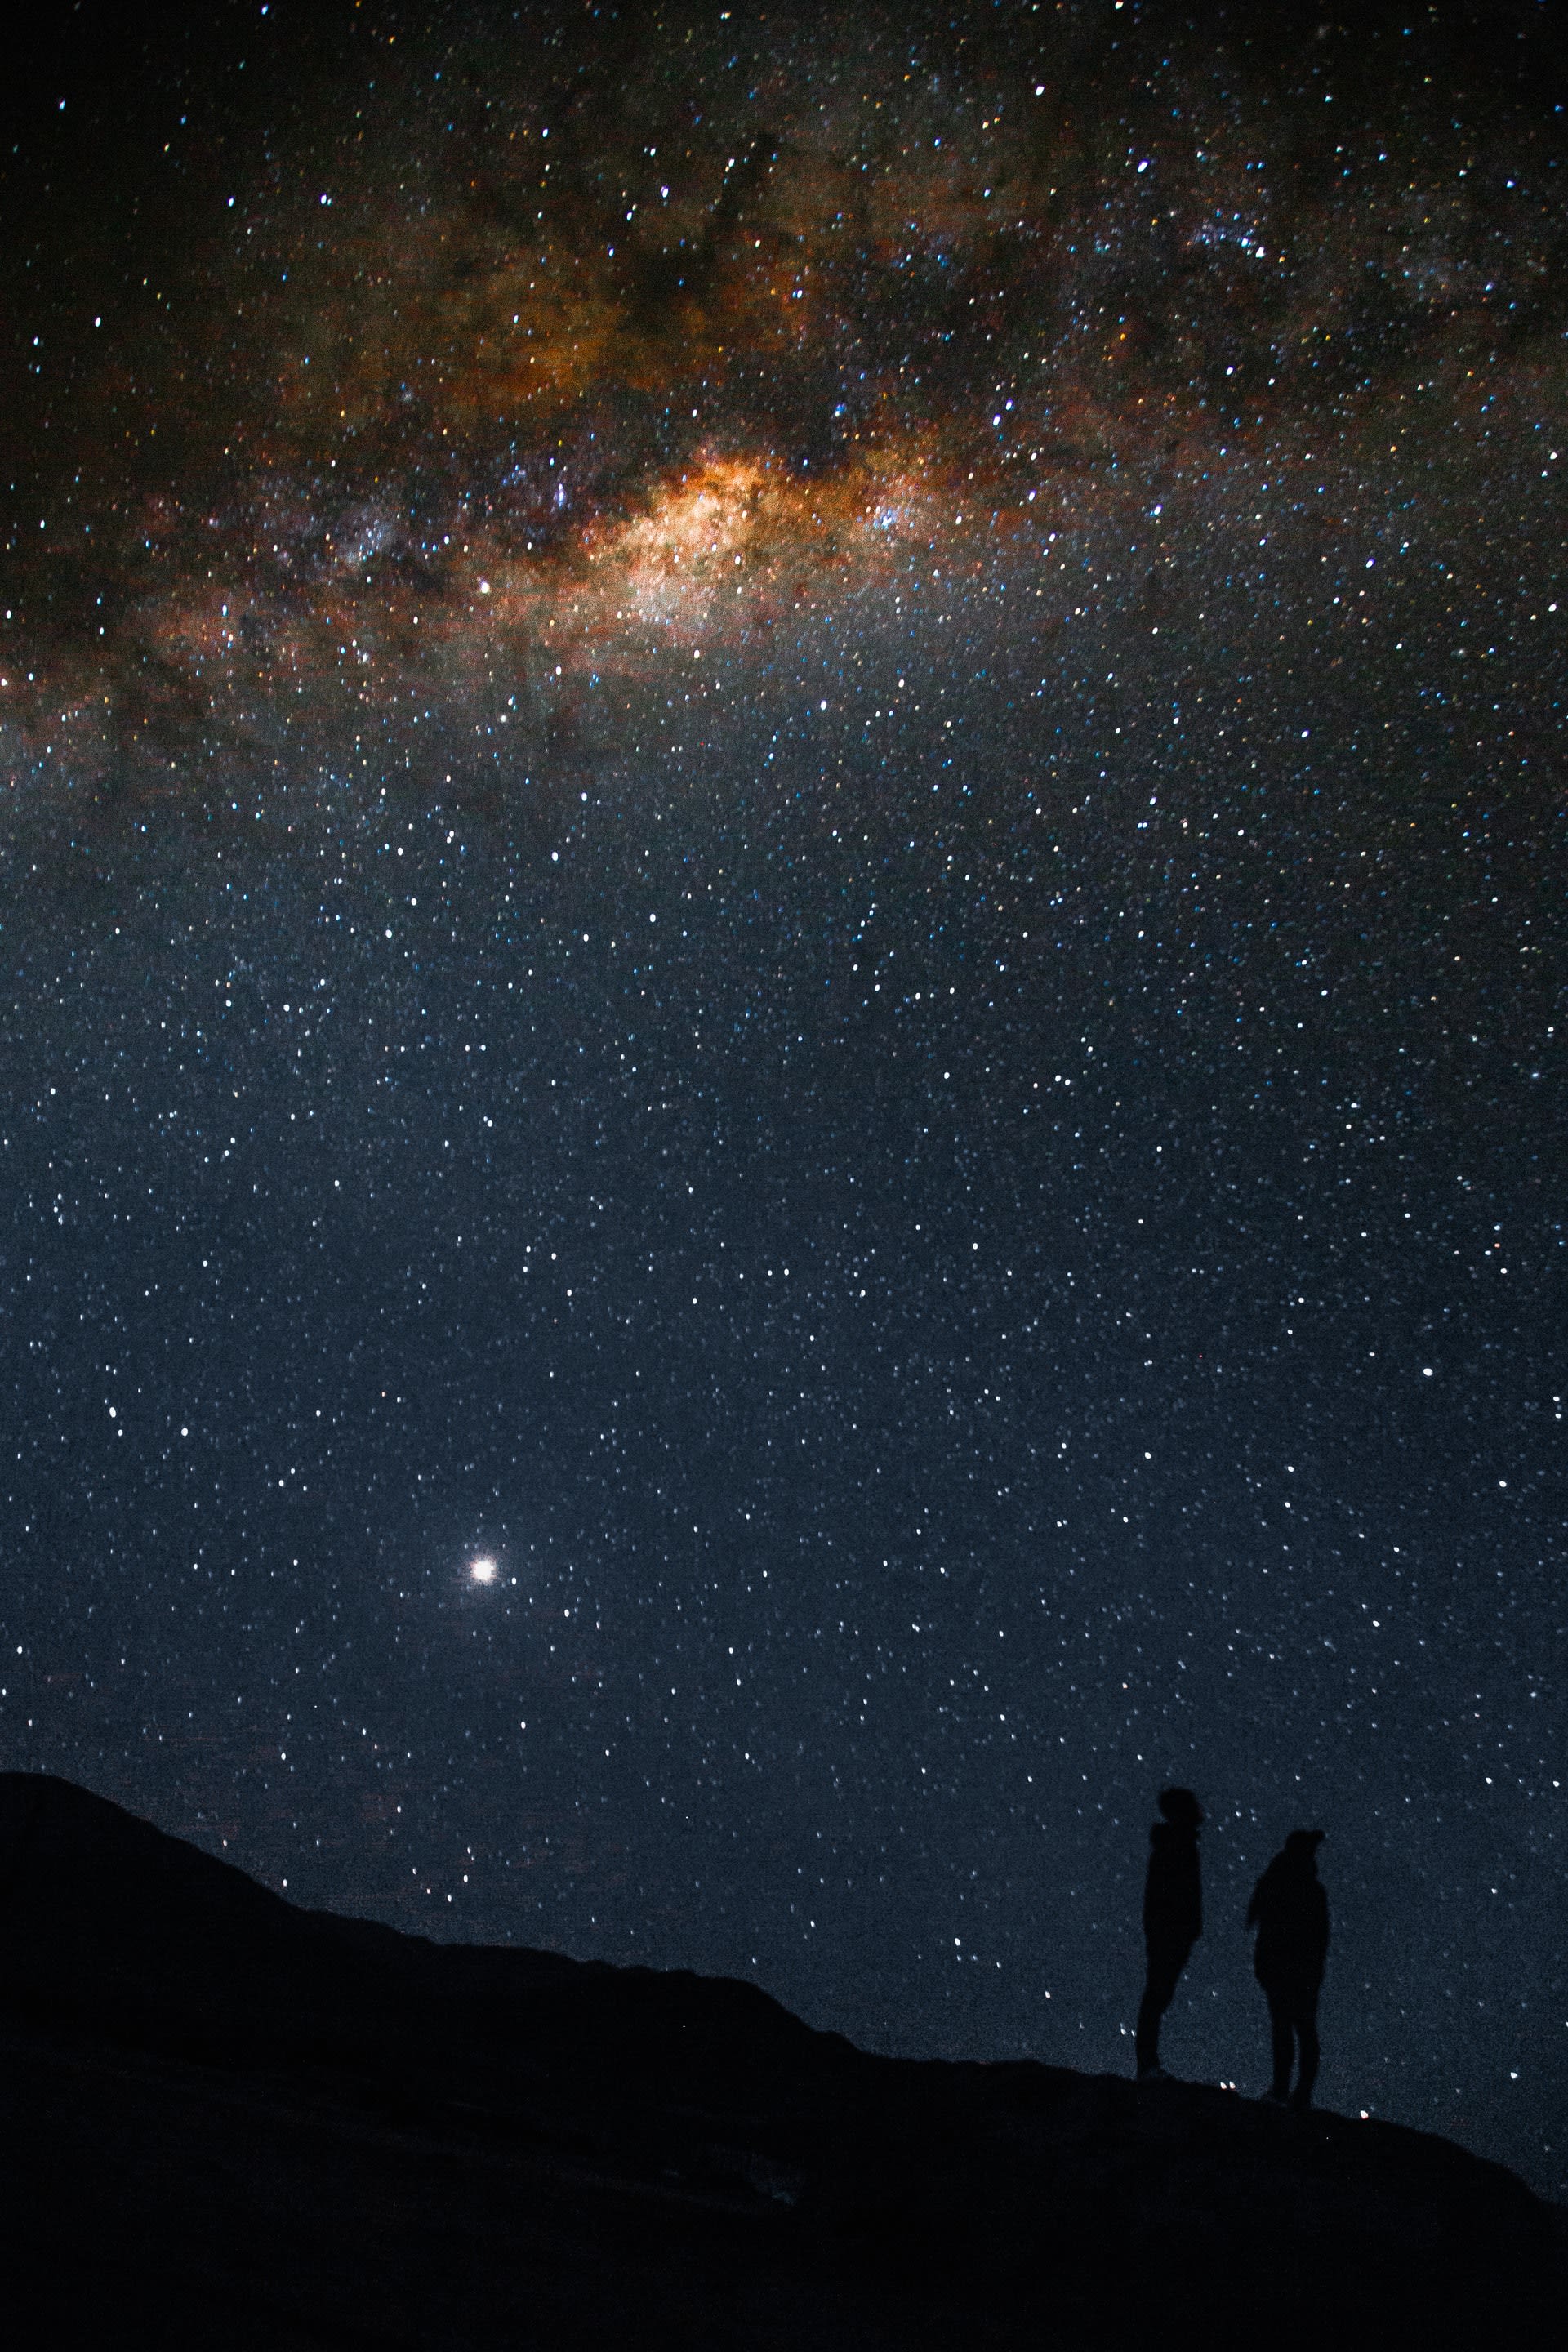 Stargazing in Chile